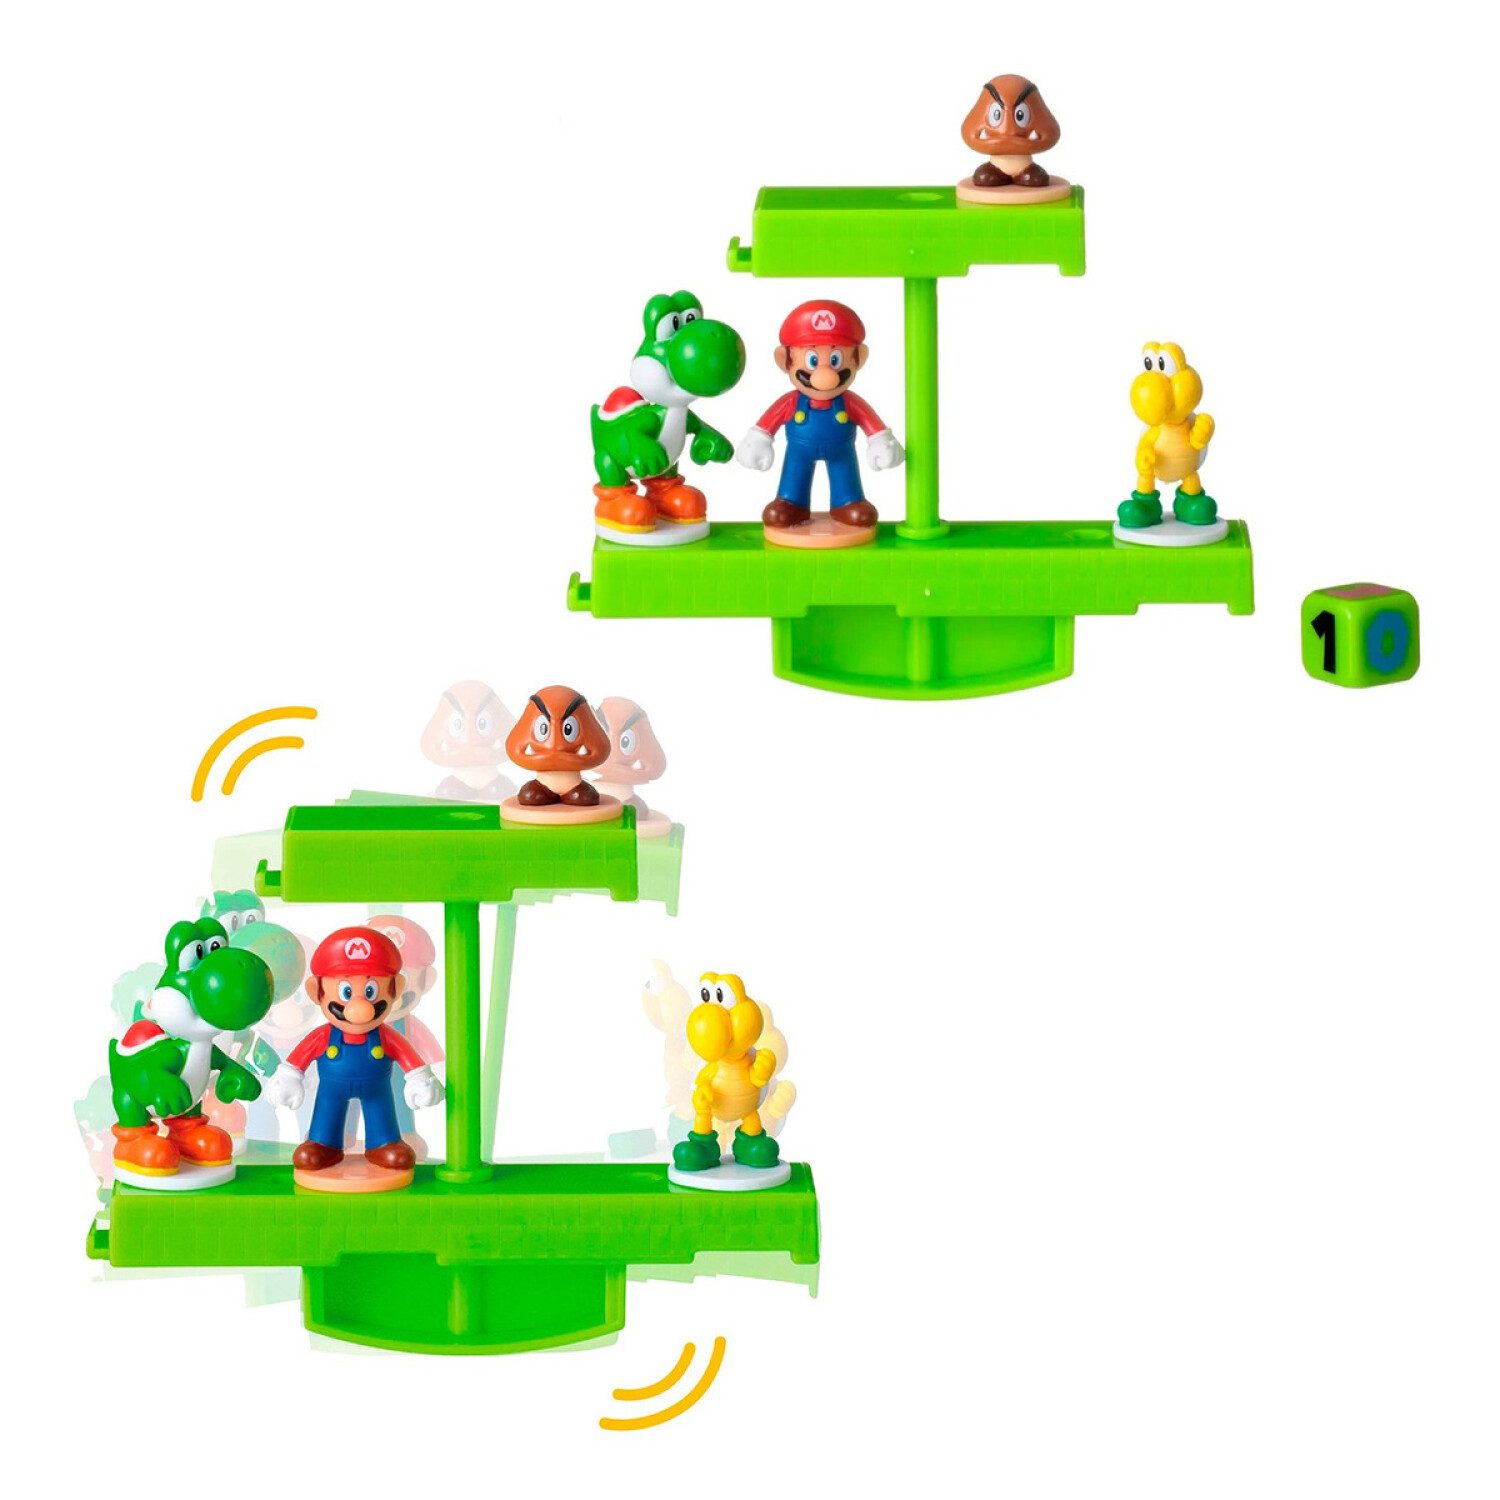 Conjunto De Mini Figuras - Super Mario - Jogo Do Equilíbrio